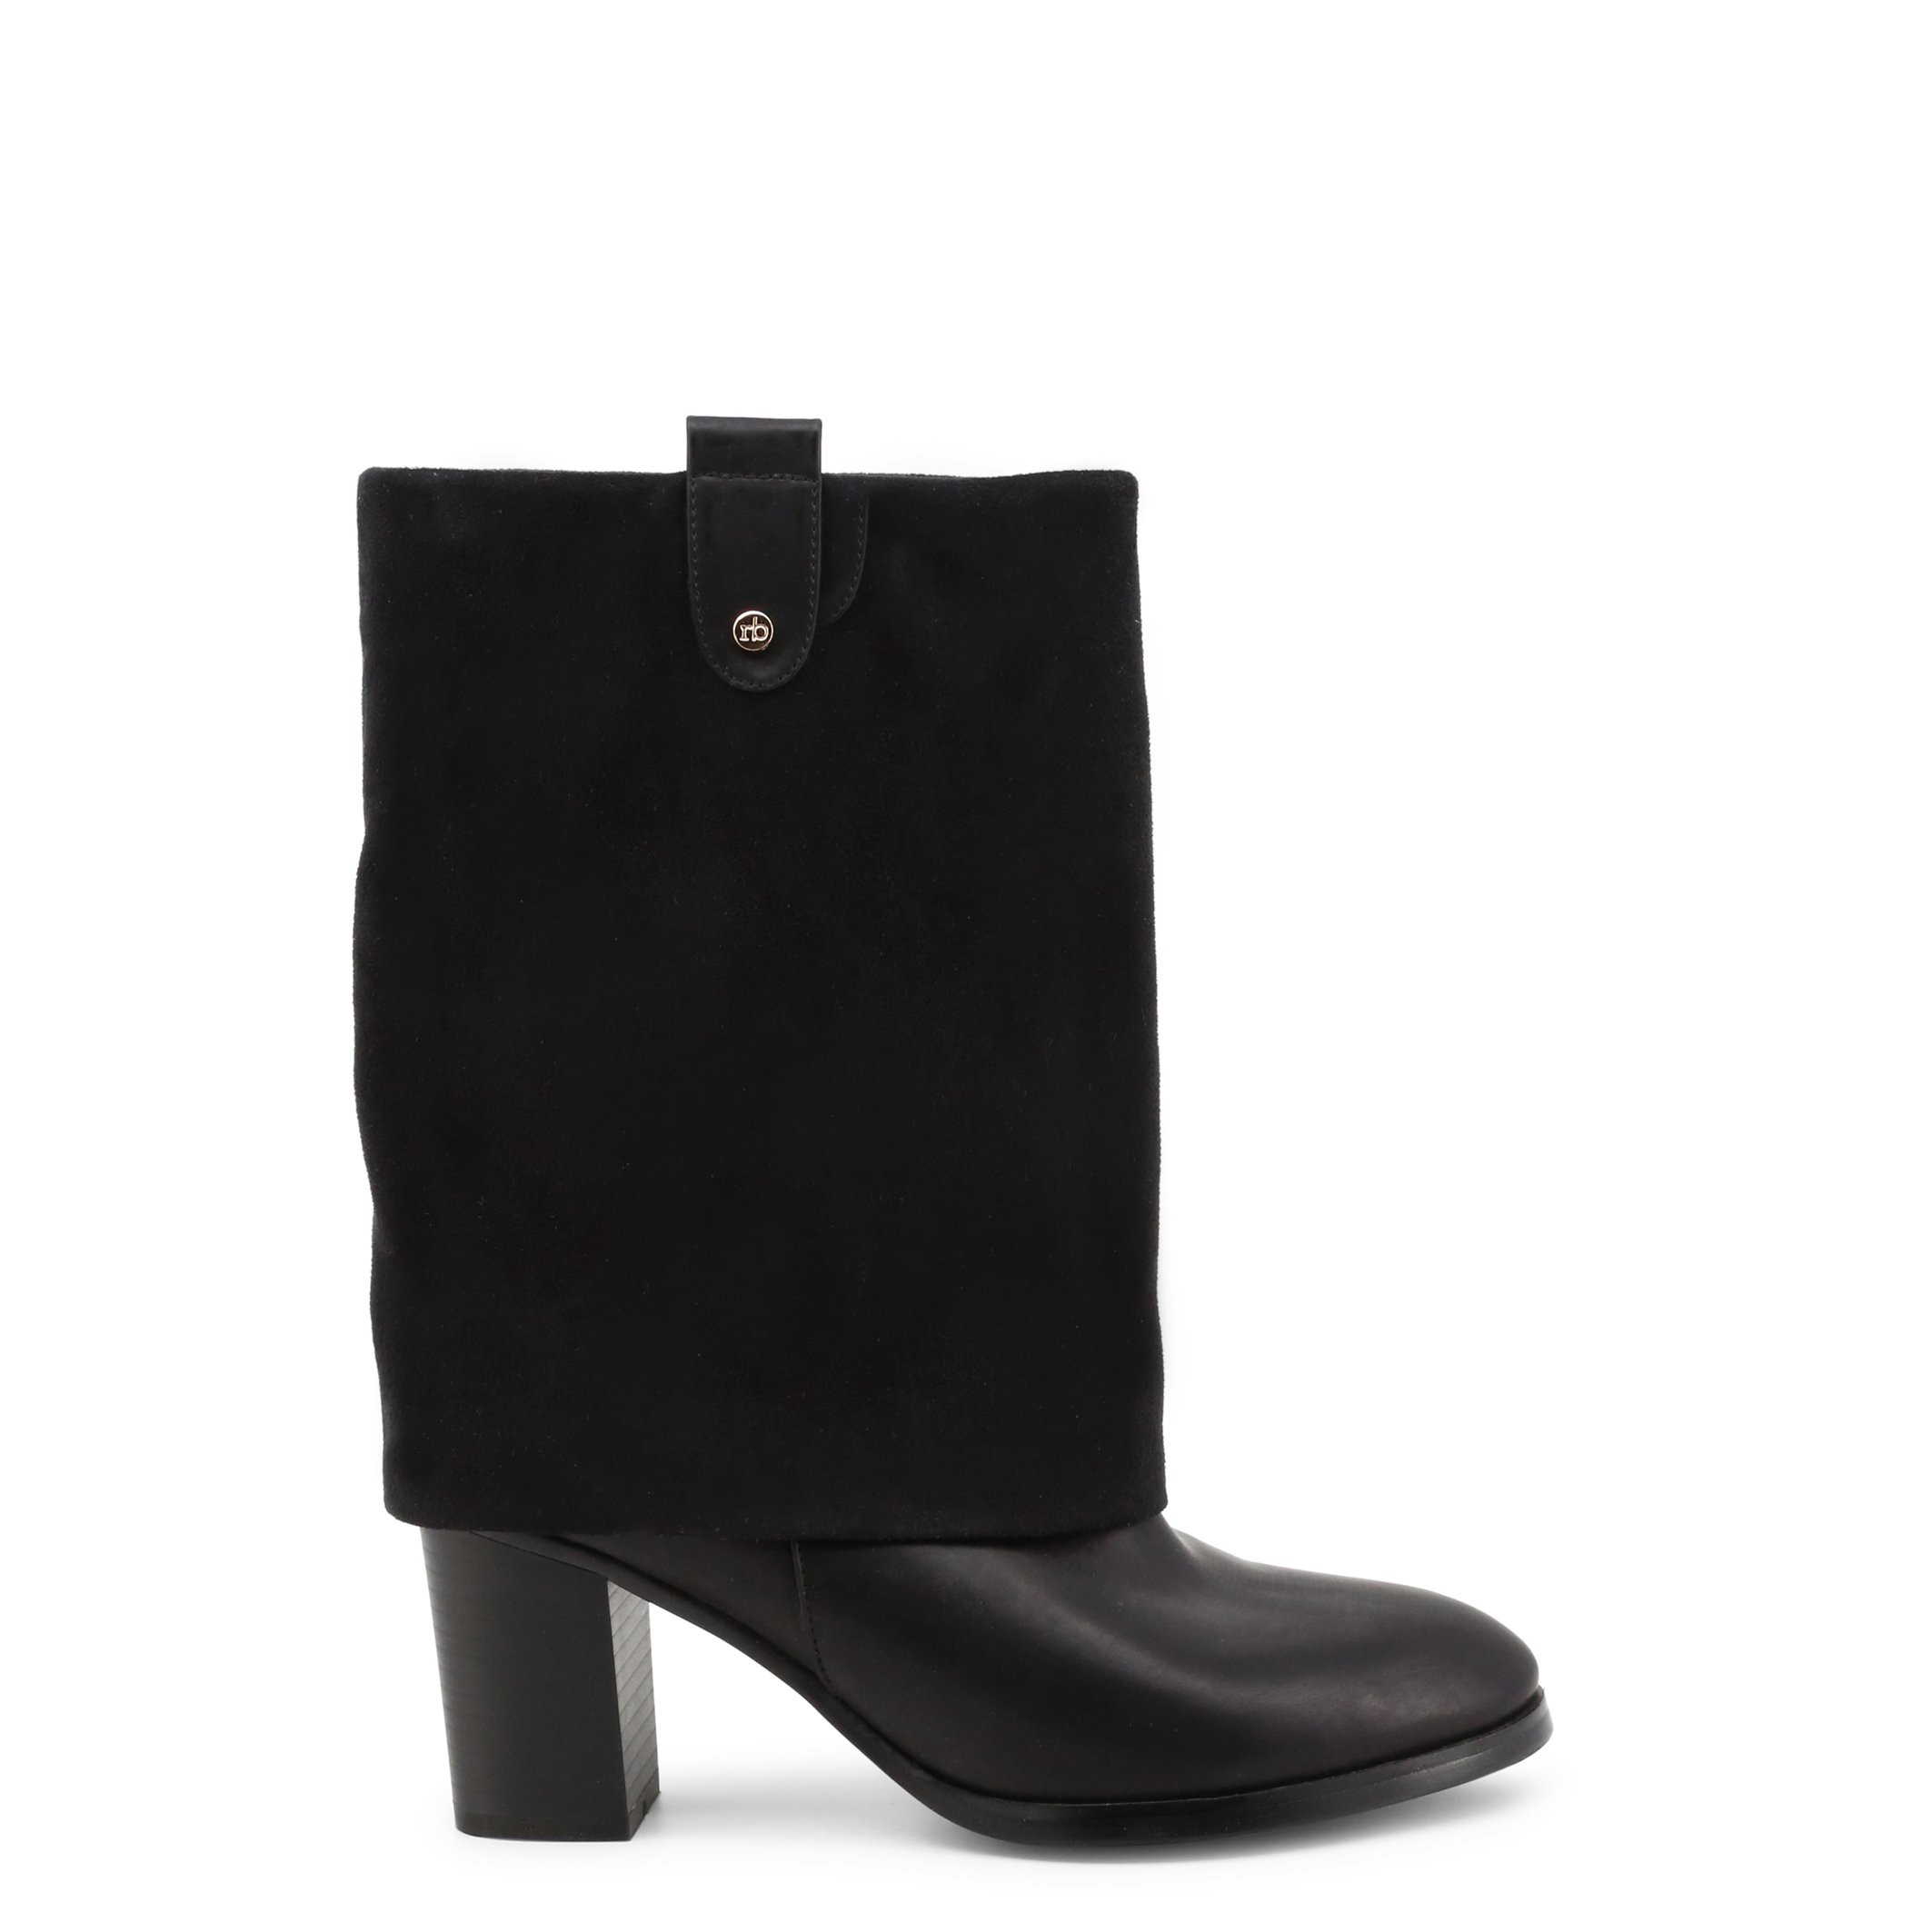 Roccobarocco Women's Ankle Boots, Pump Heel Brown / Black - B341578